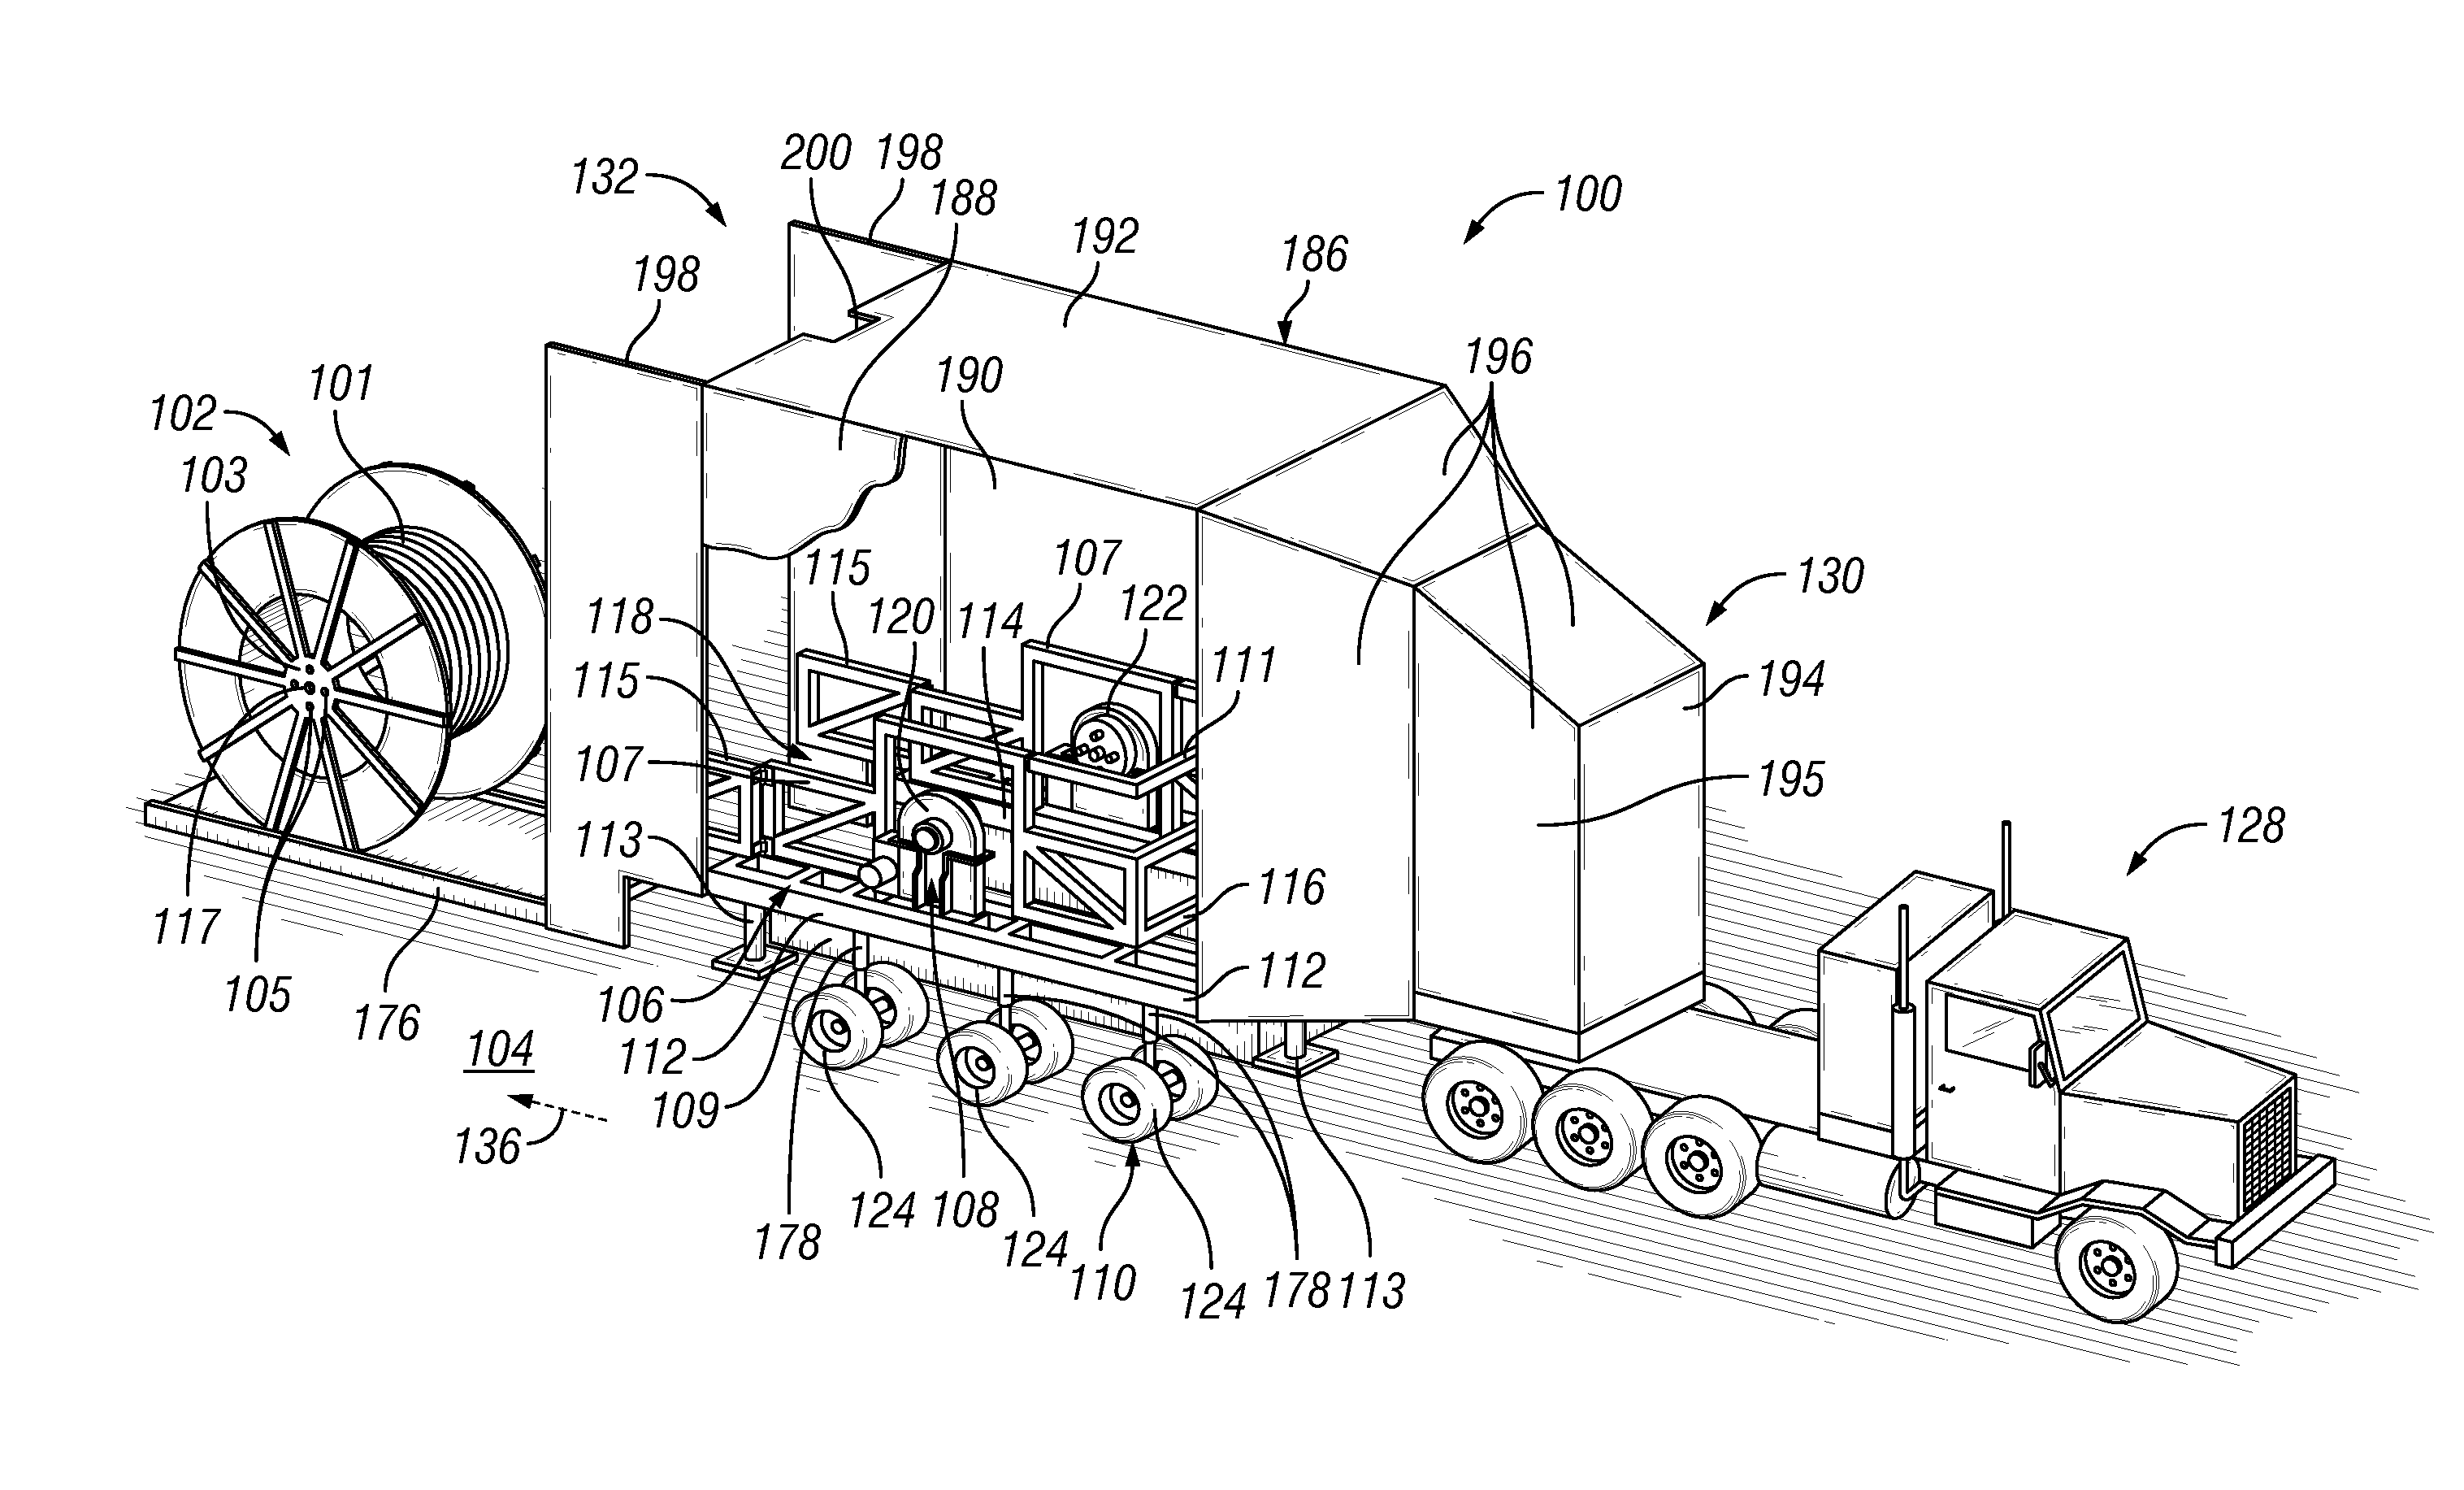 Reel transport apparatus and method